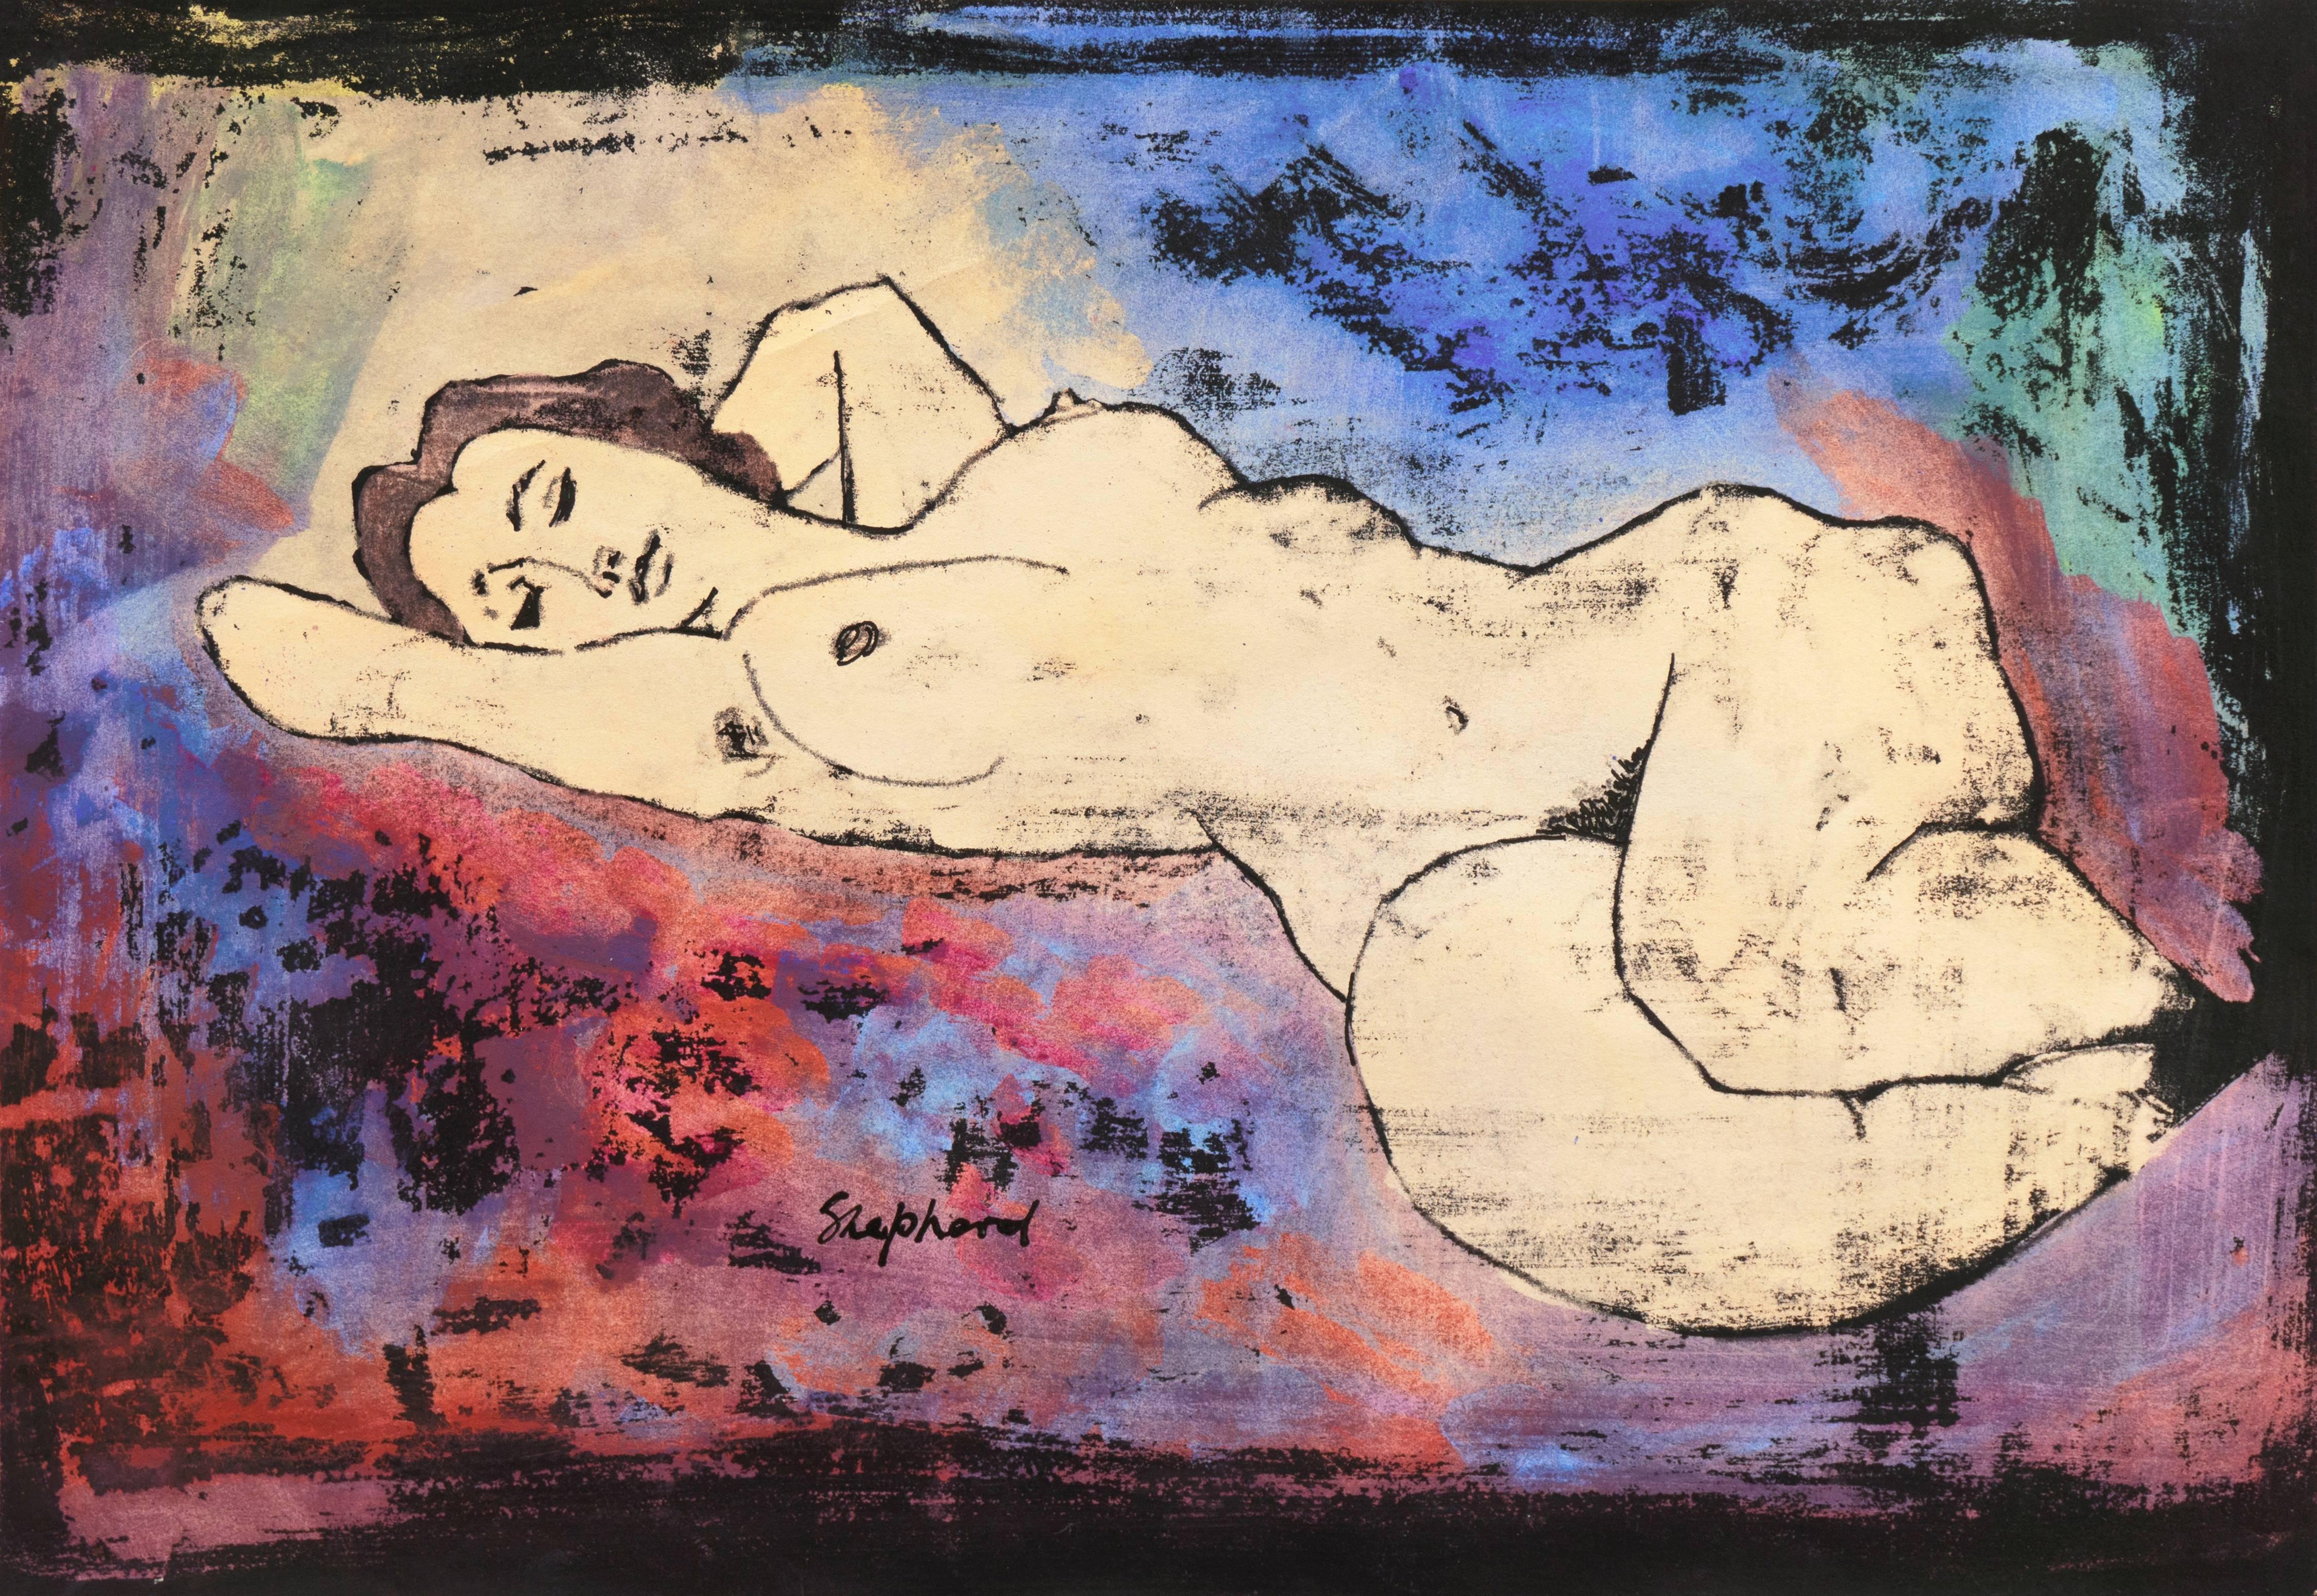 Sydney Horne Shepherd Figurative Art - 'Reclining Nude', Glasgow School of Art, Dundee, Post-Impressionist Figural